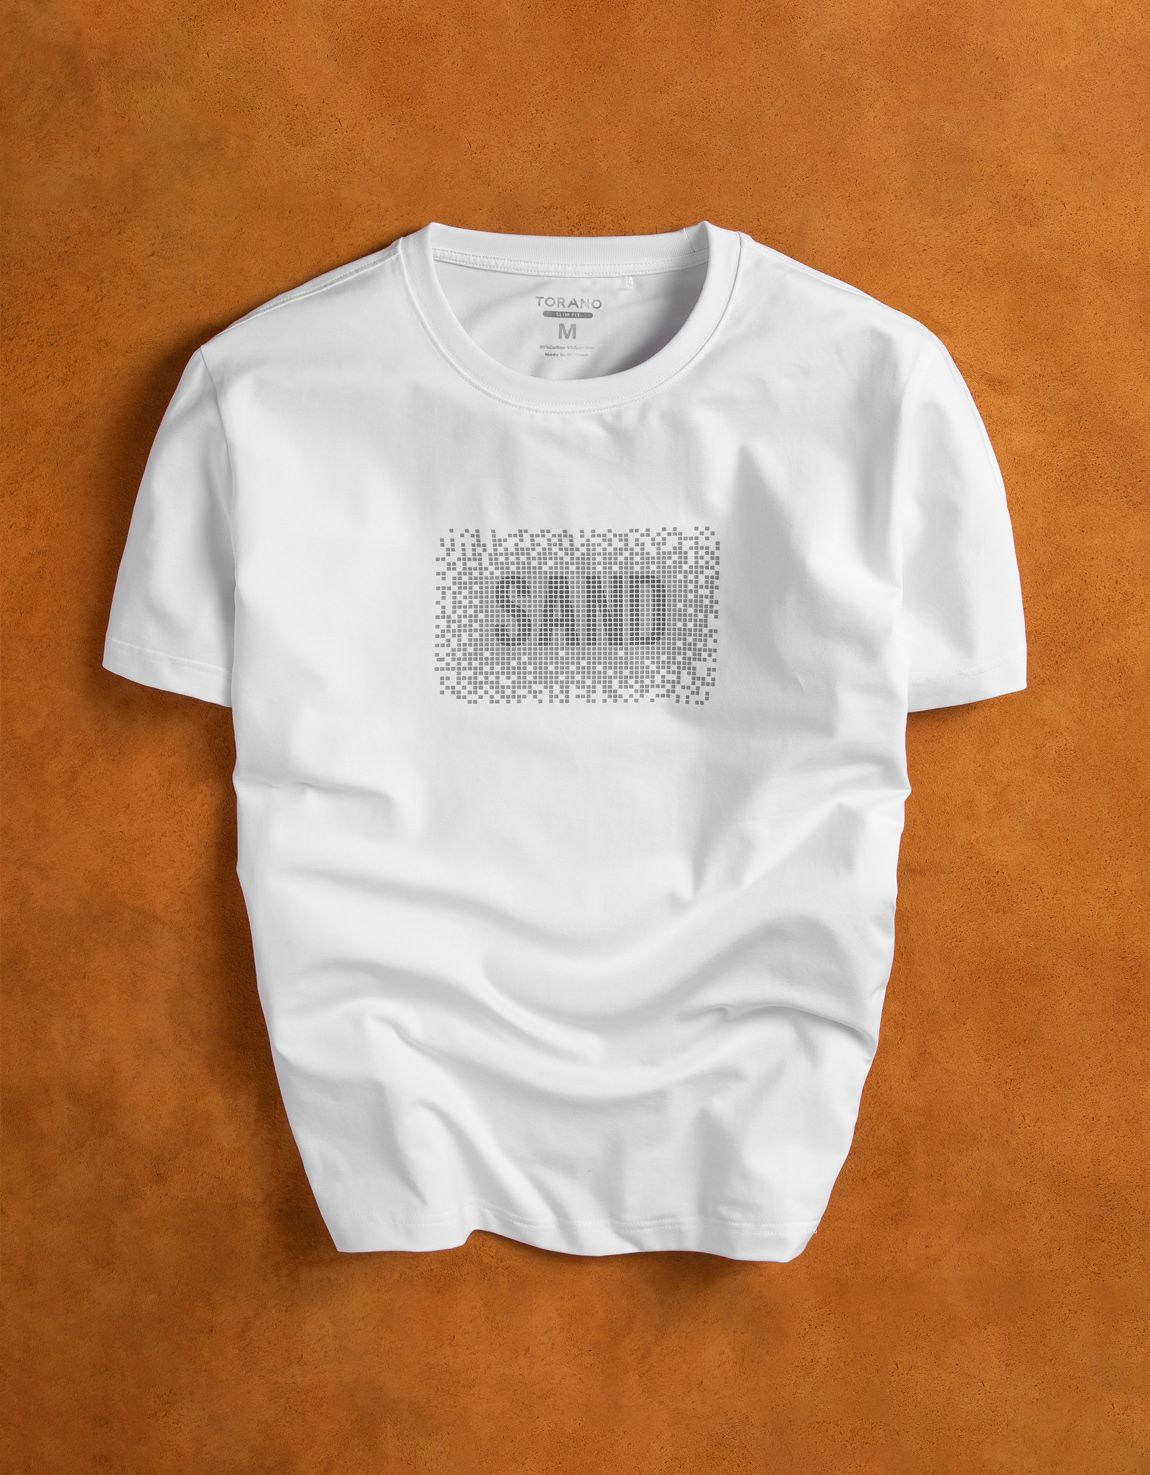  Áo T shirt họa tiết in Sand FSTS017 